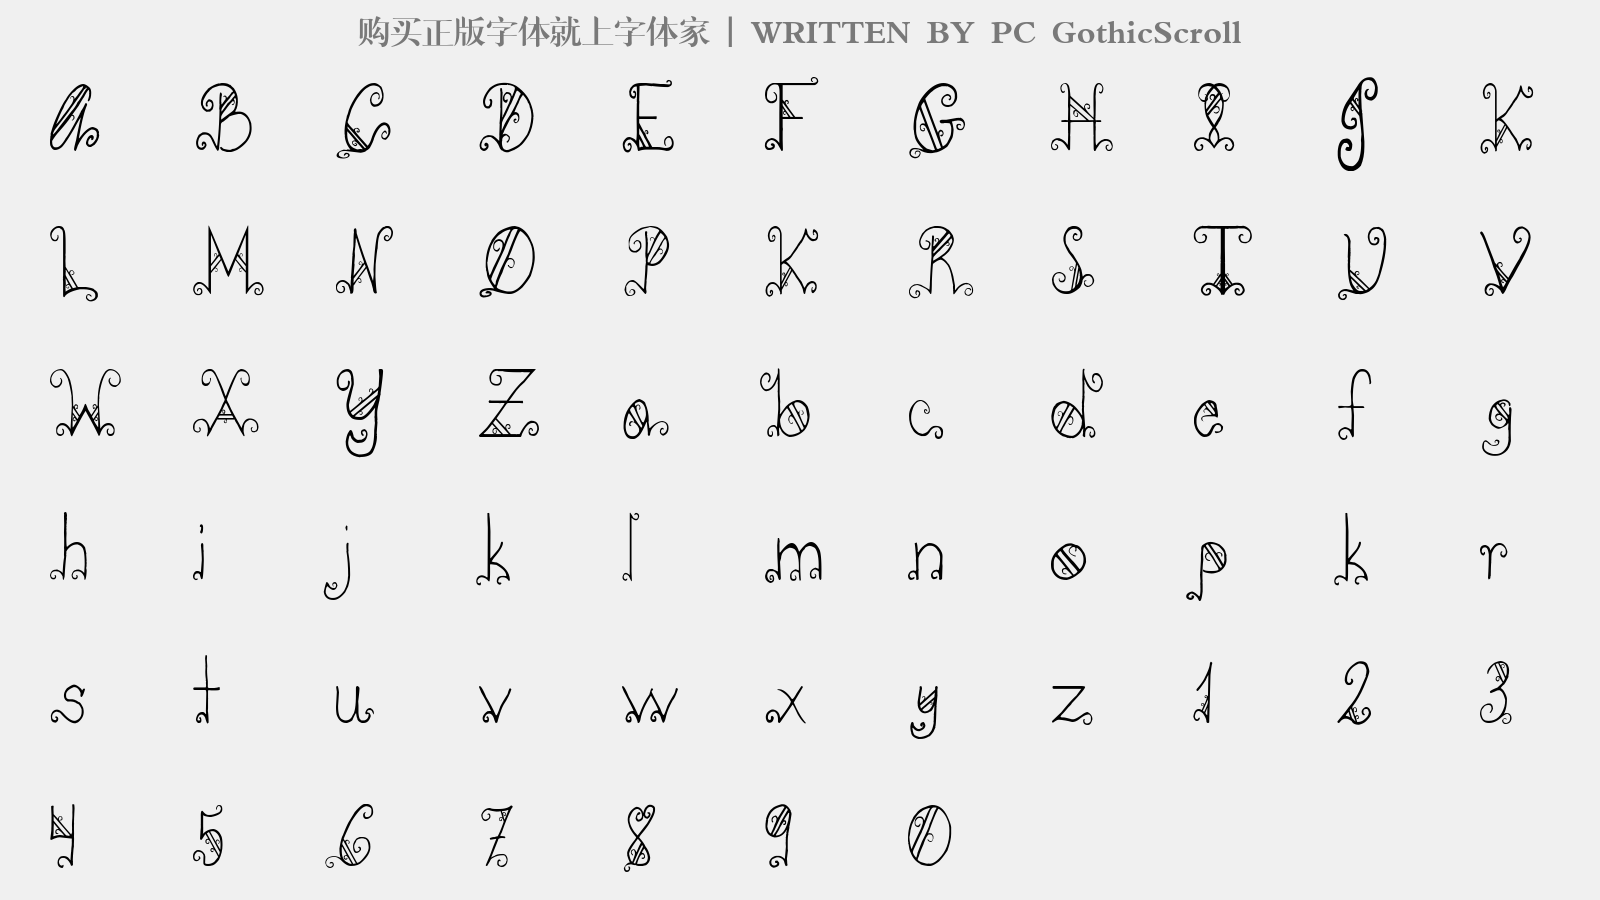 PC GothicScroll - 大写字母/小写字母/数字